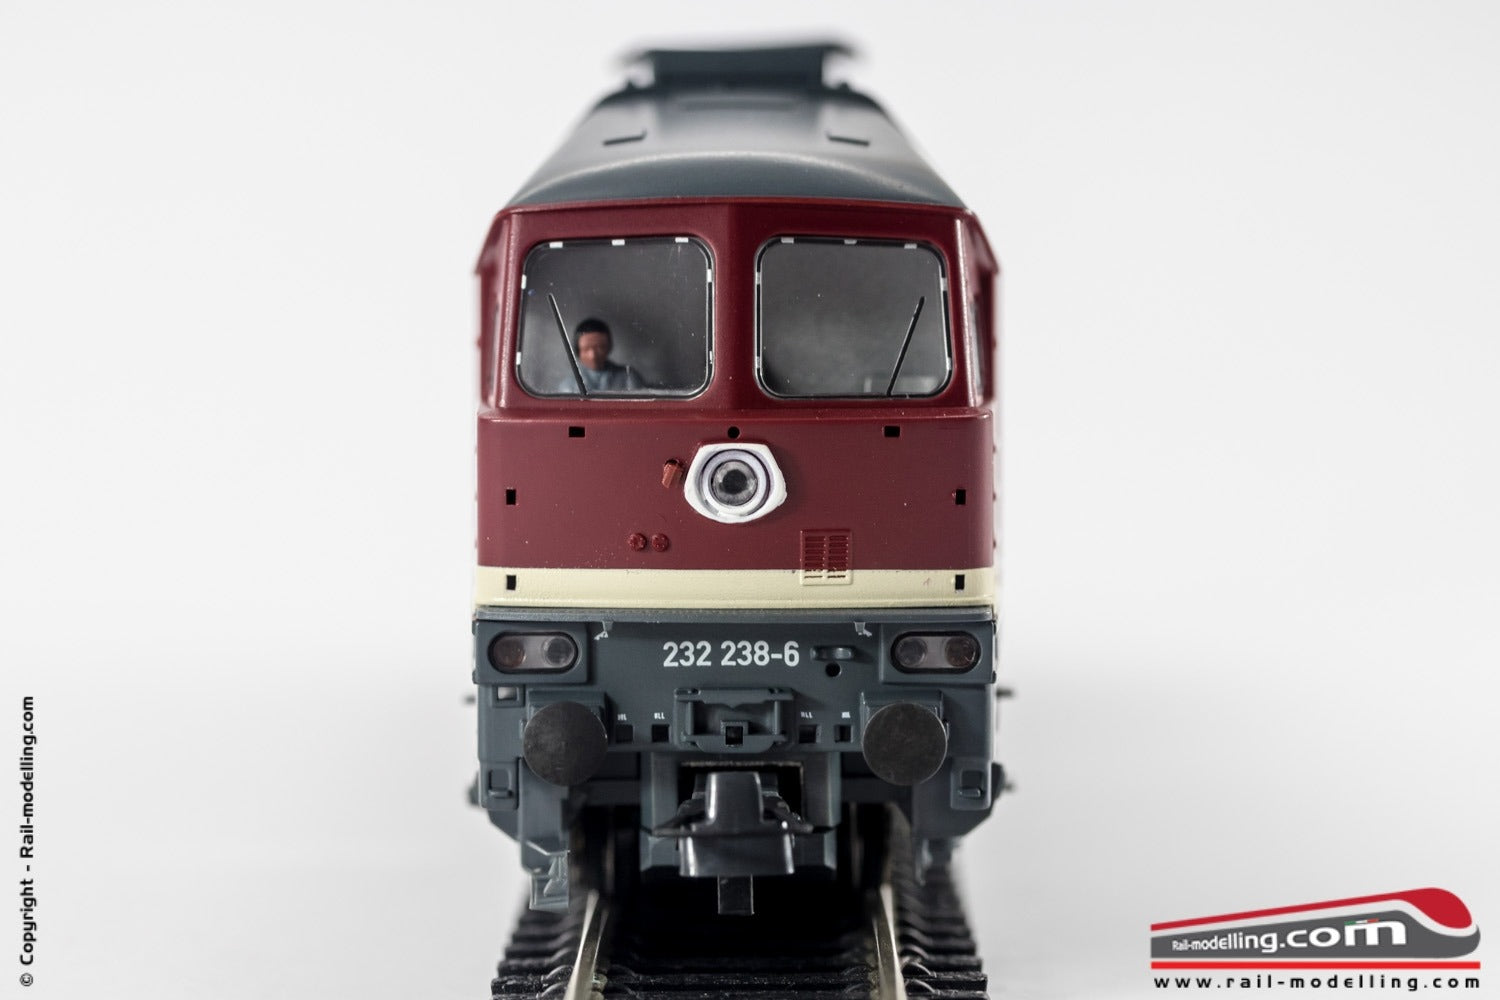 ROCO 52460 - H0 1:87 - Locomotiva Diesel tedesca DB Gruppo 232 motore a volano Ep. V